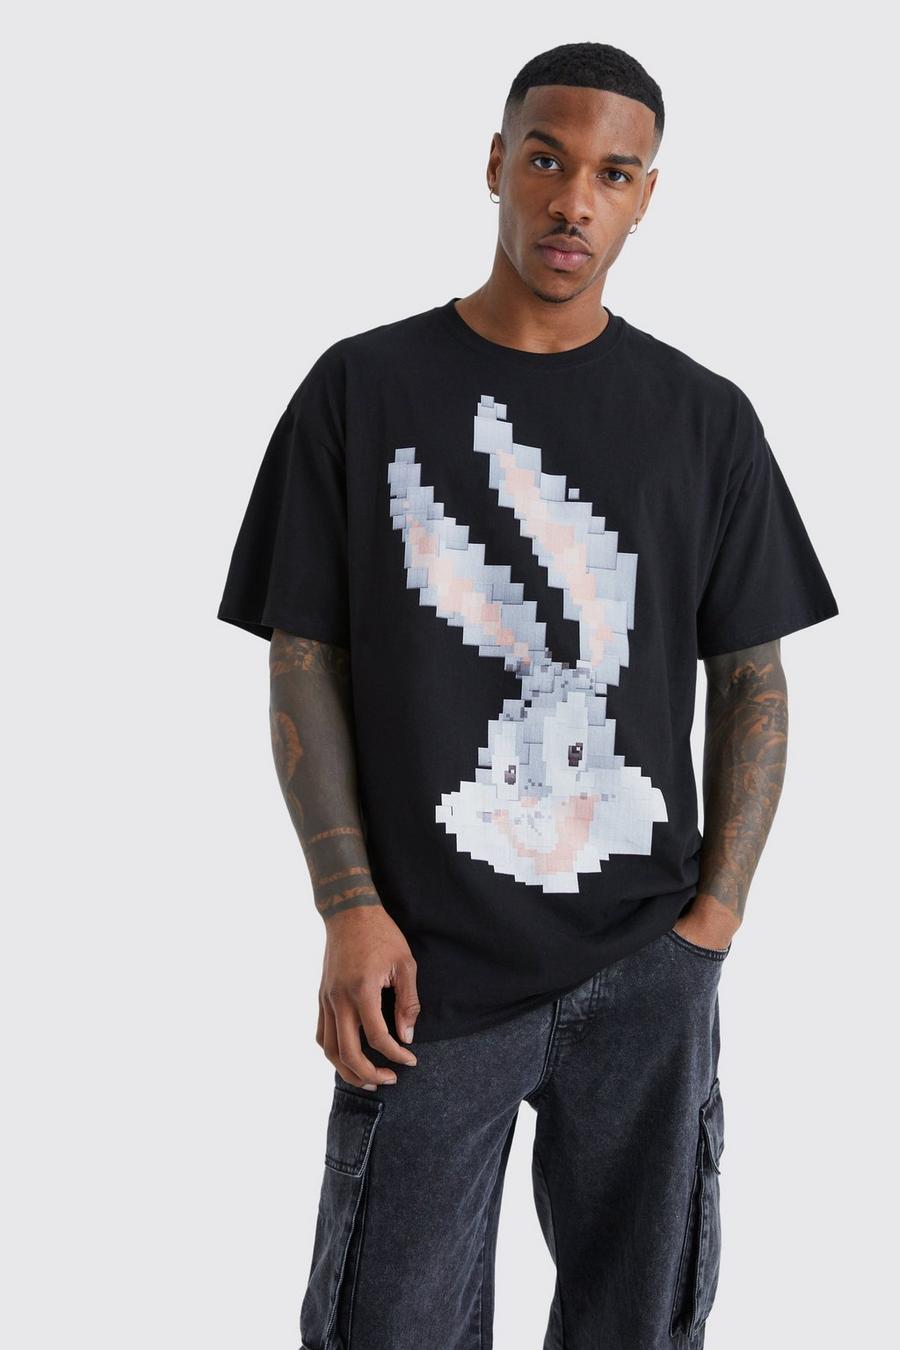 Black Oversized Pixel Bugs Bunny License T-shirt